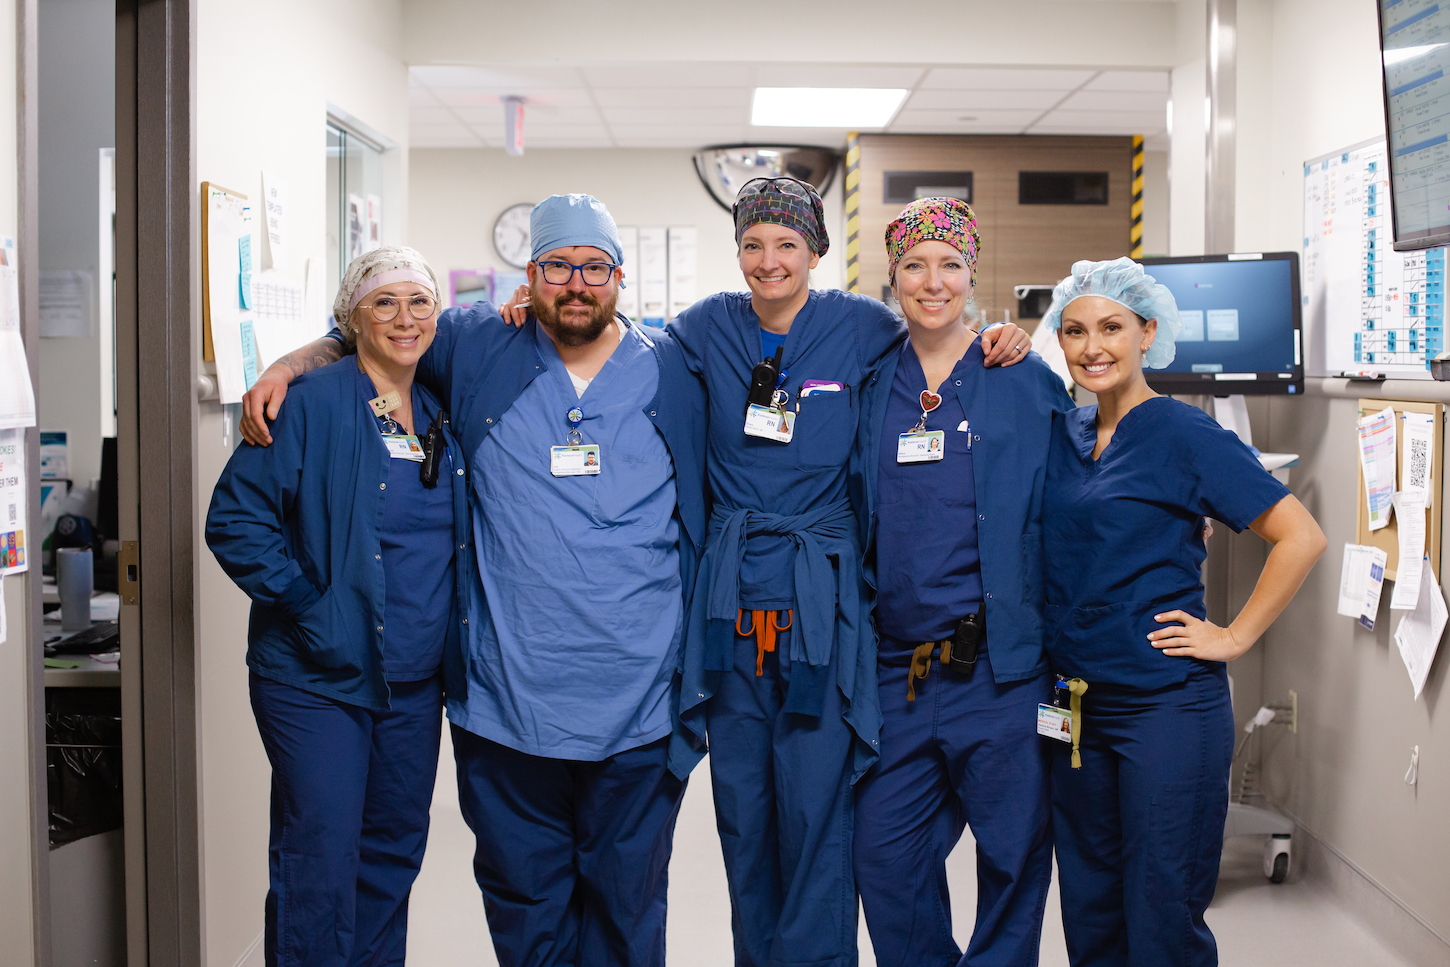 Group photo of nurses at Kootenai Health